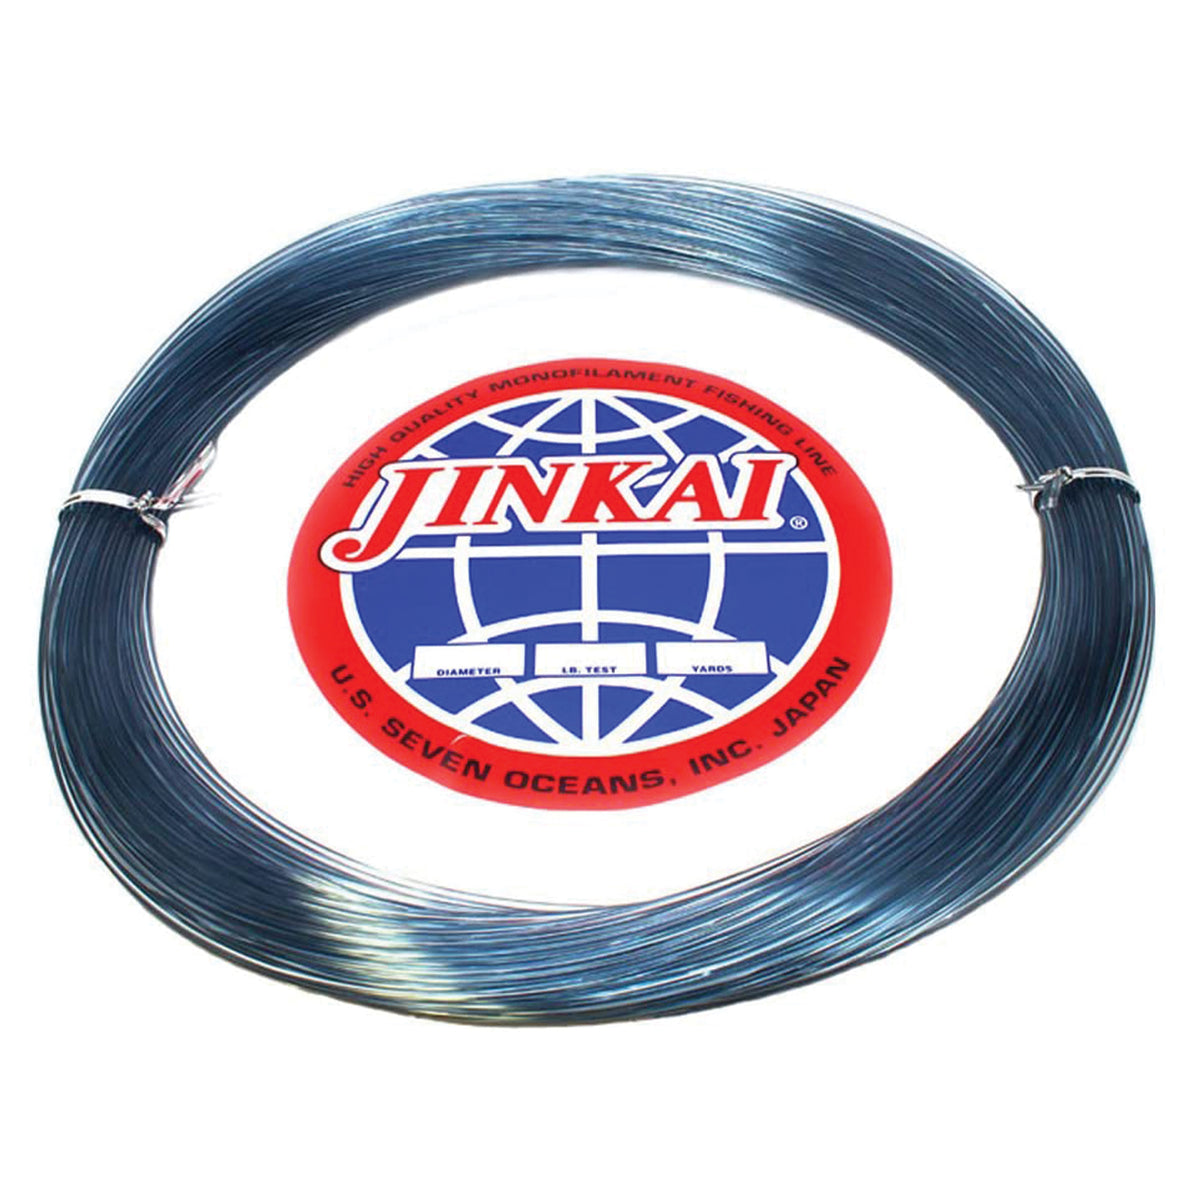 Swatter Champion Copolymer Leader Mono Fishing Line 60m 50lb, 80lb, 120lb -  Wholesale Fishing Supplies